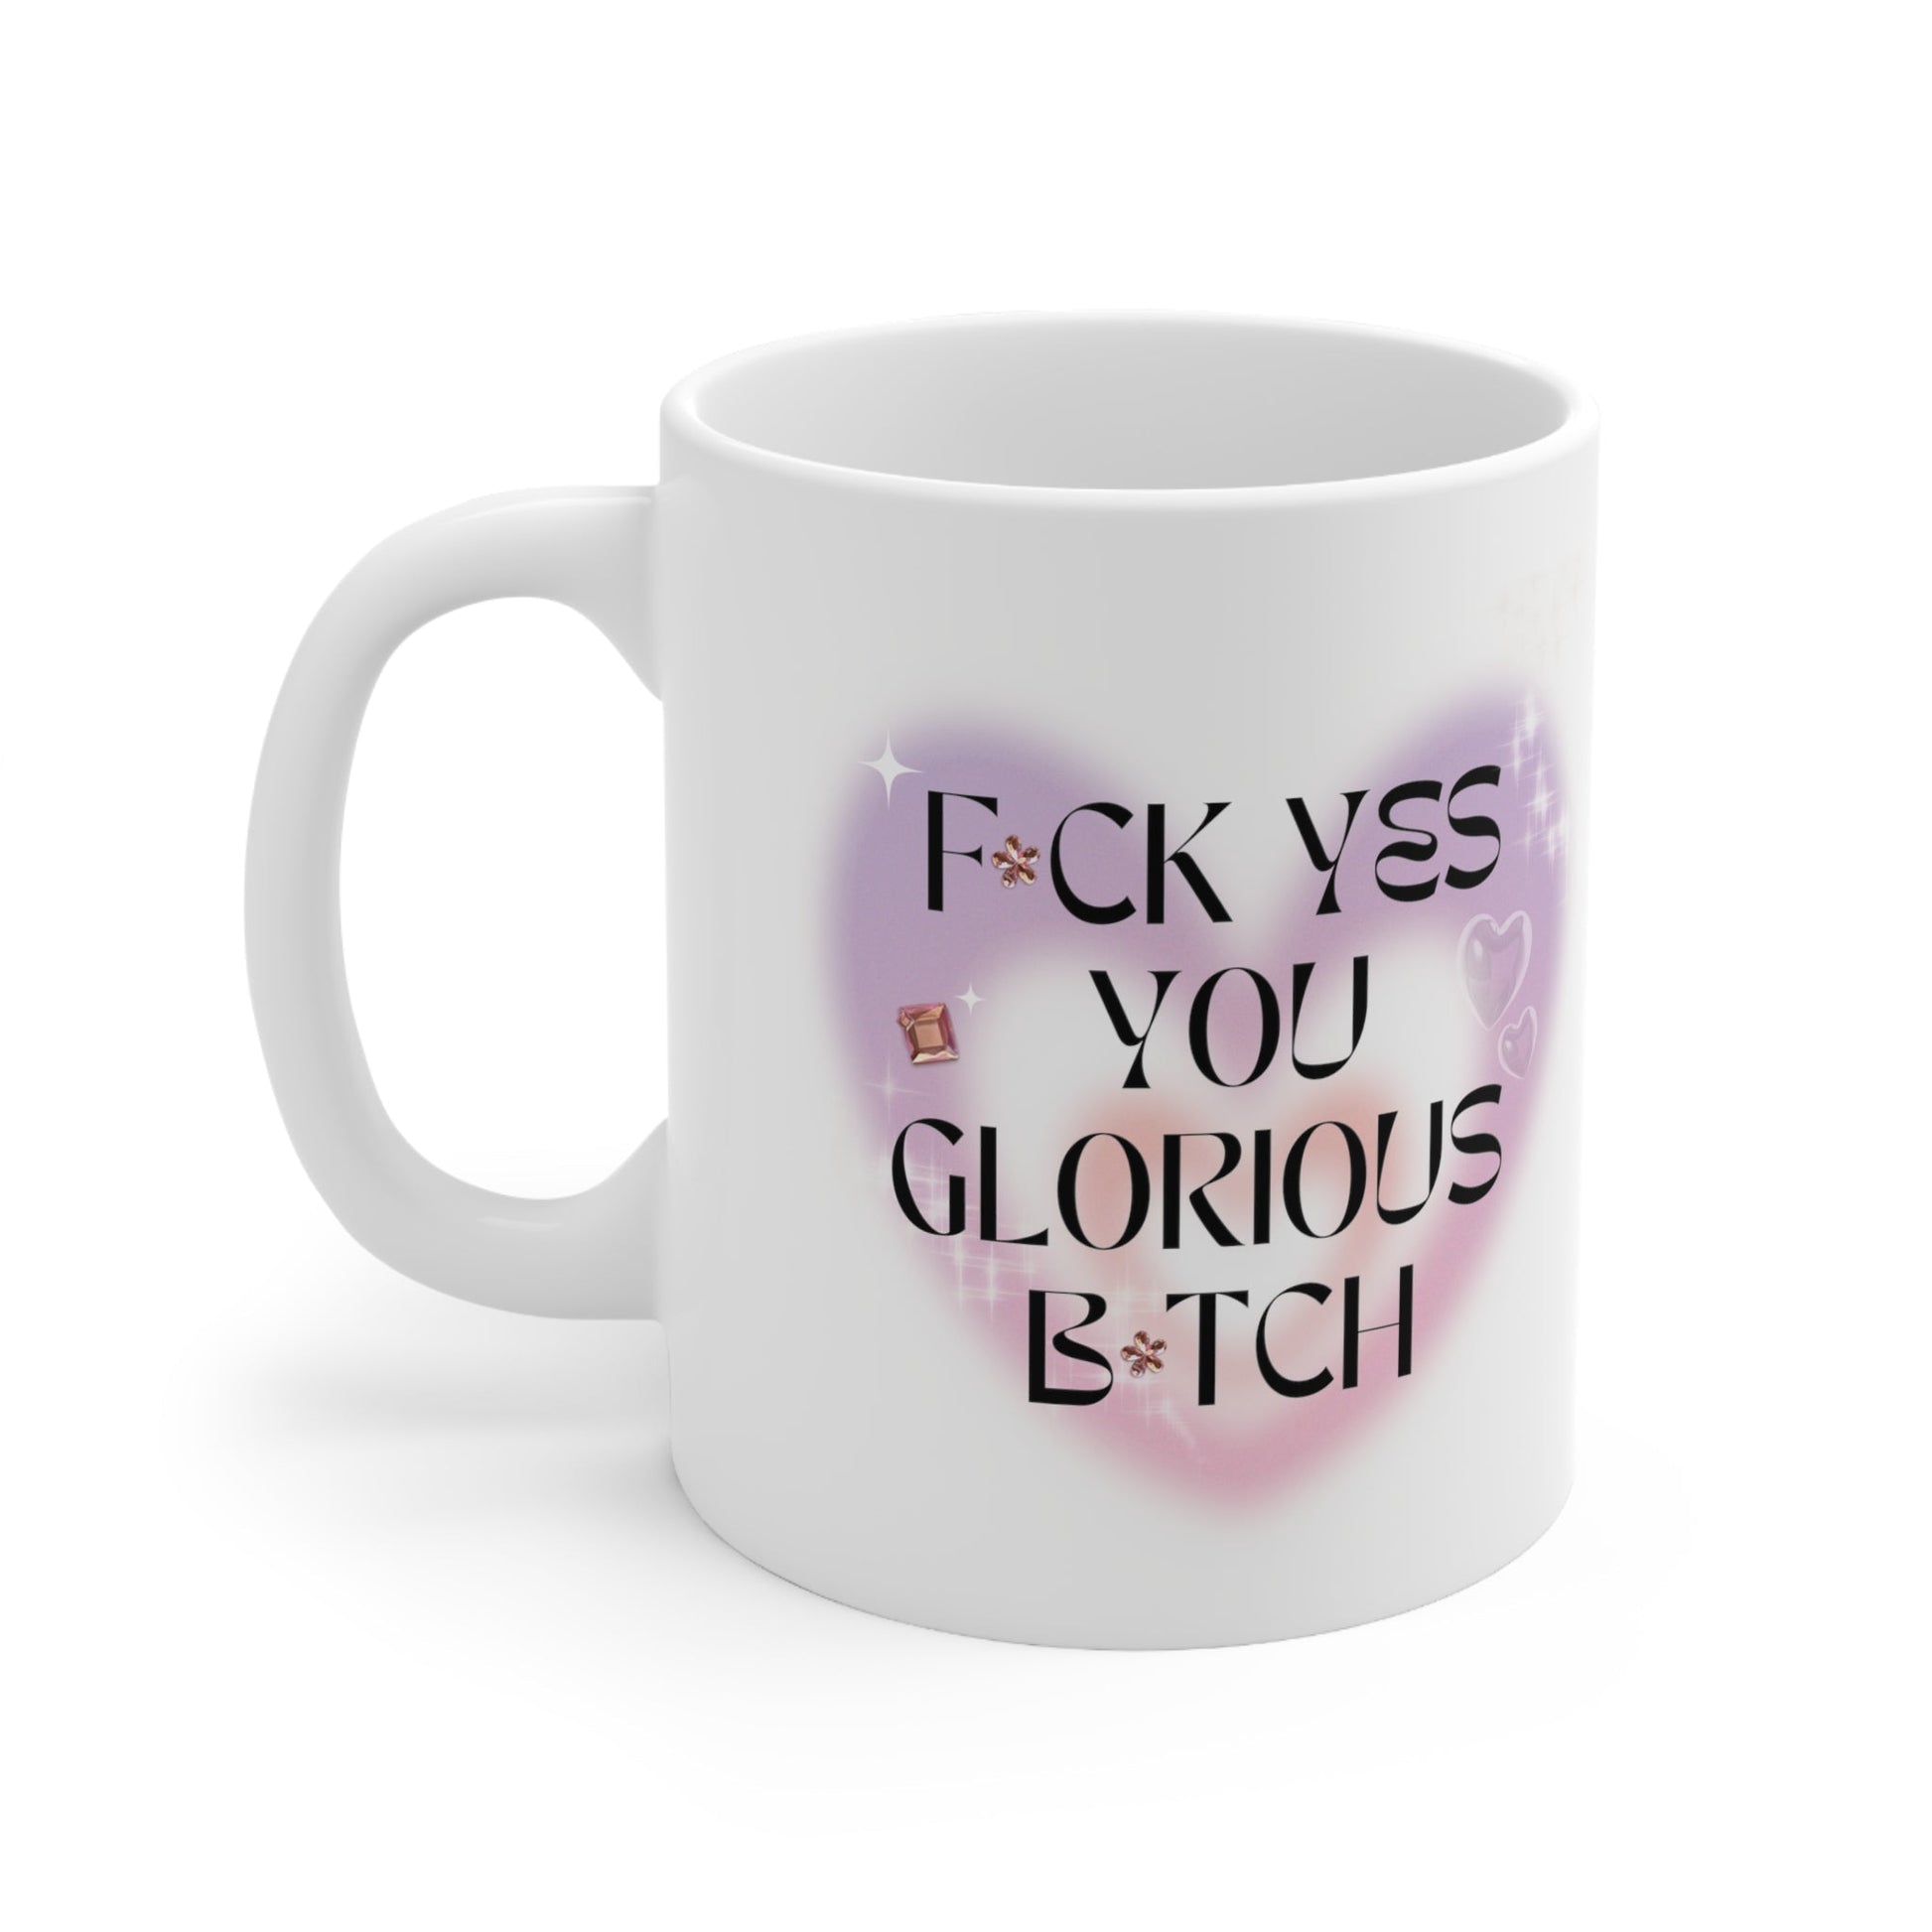 F💎ck Yes You Glorious B💎tch Ceramic Mug 11oz